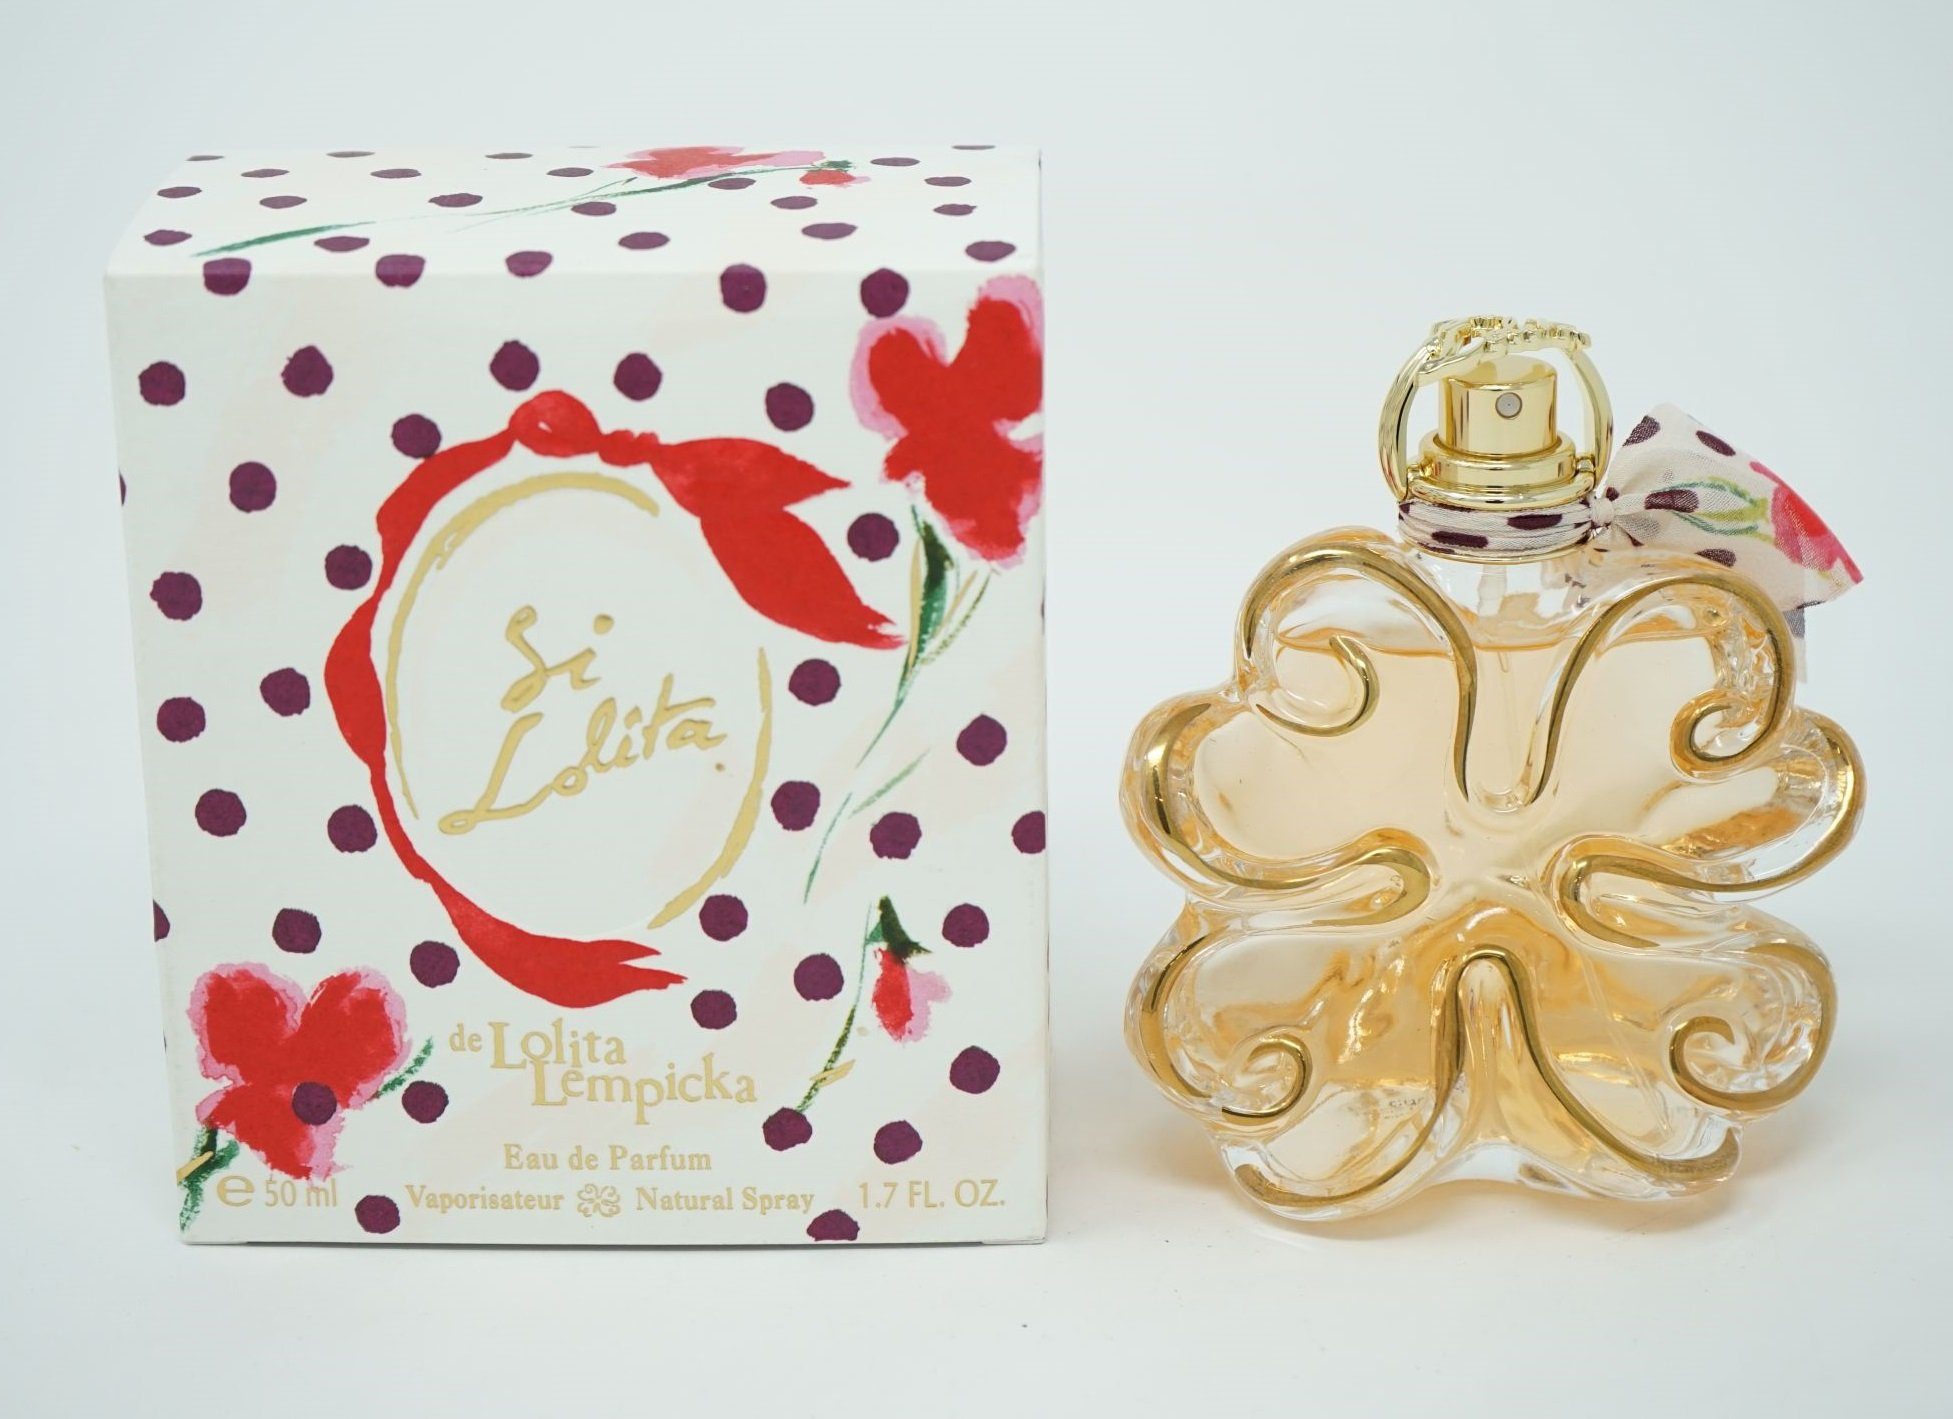 DOLCE & GABBANA Lolita Spray parfum de de Lolita Eau Parfum Lempicka Lolita 50ml Eau Si Lempicka